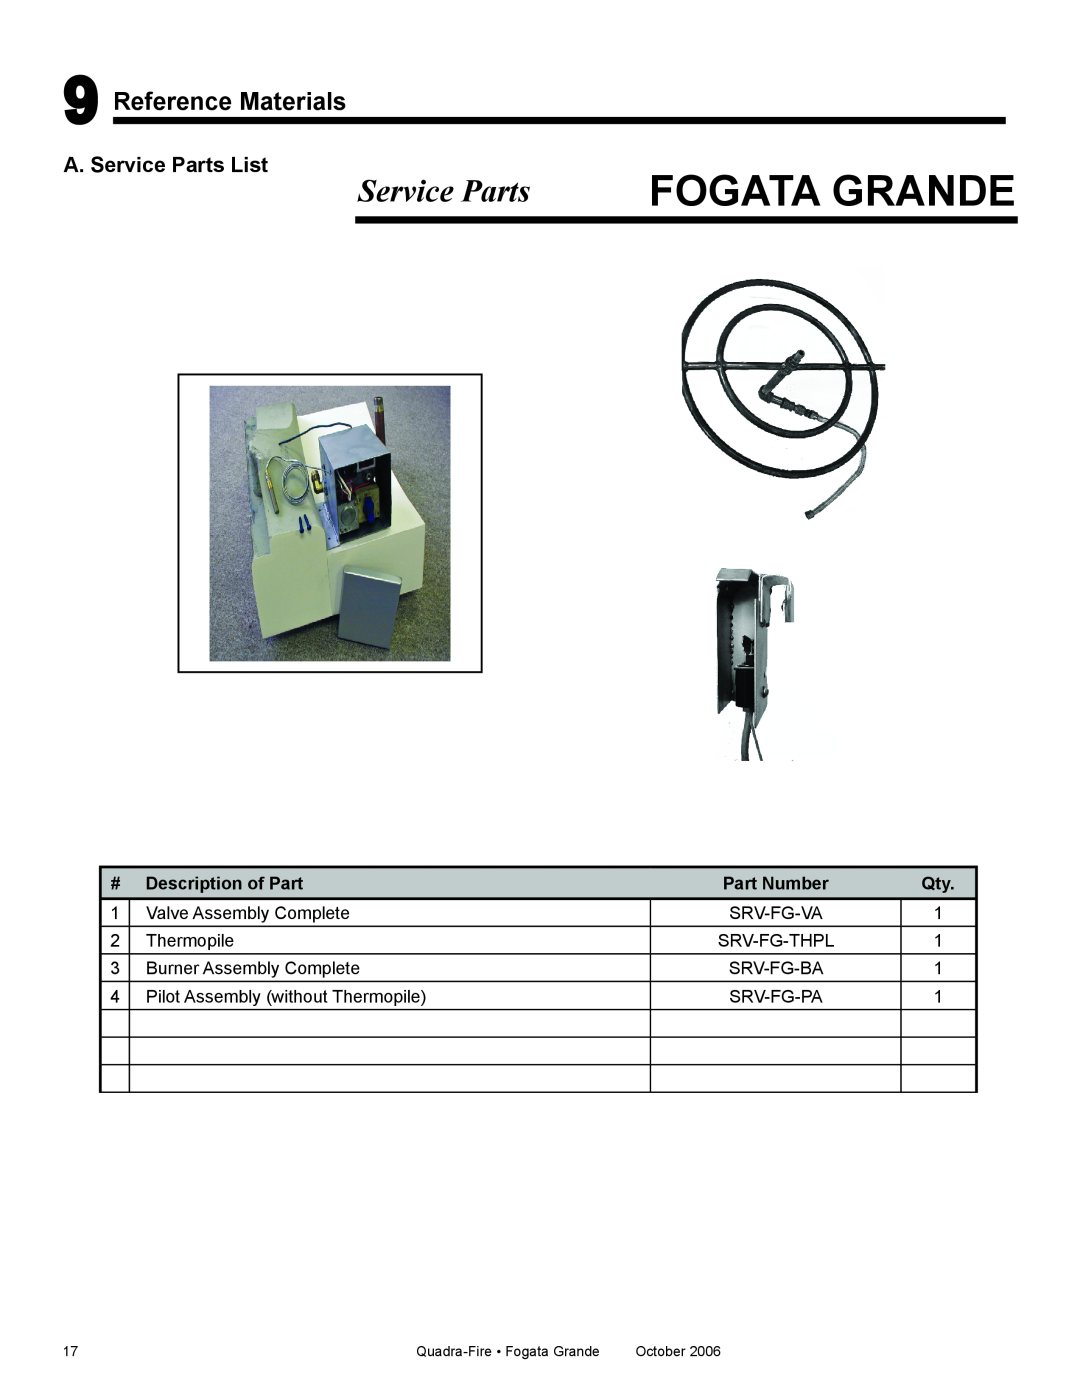 Quadra-Fire FG21SP-NG, FG21SP-LP Service Parts, Reference Materials, Fogata Grande, # Description of Part, Part Number 